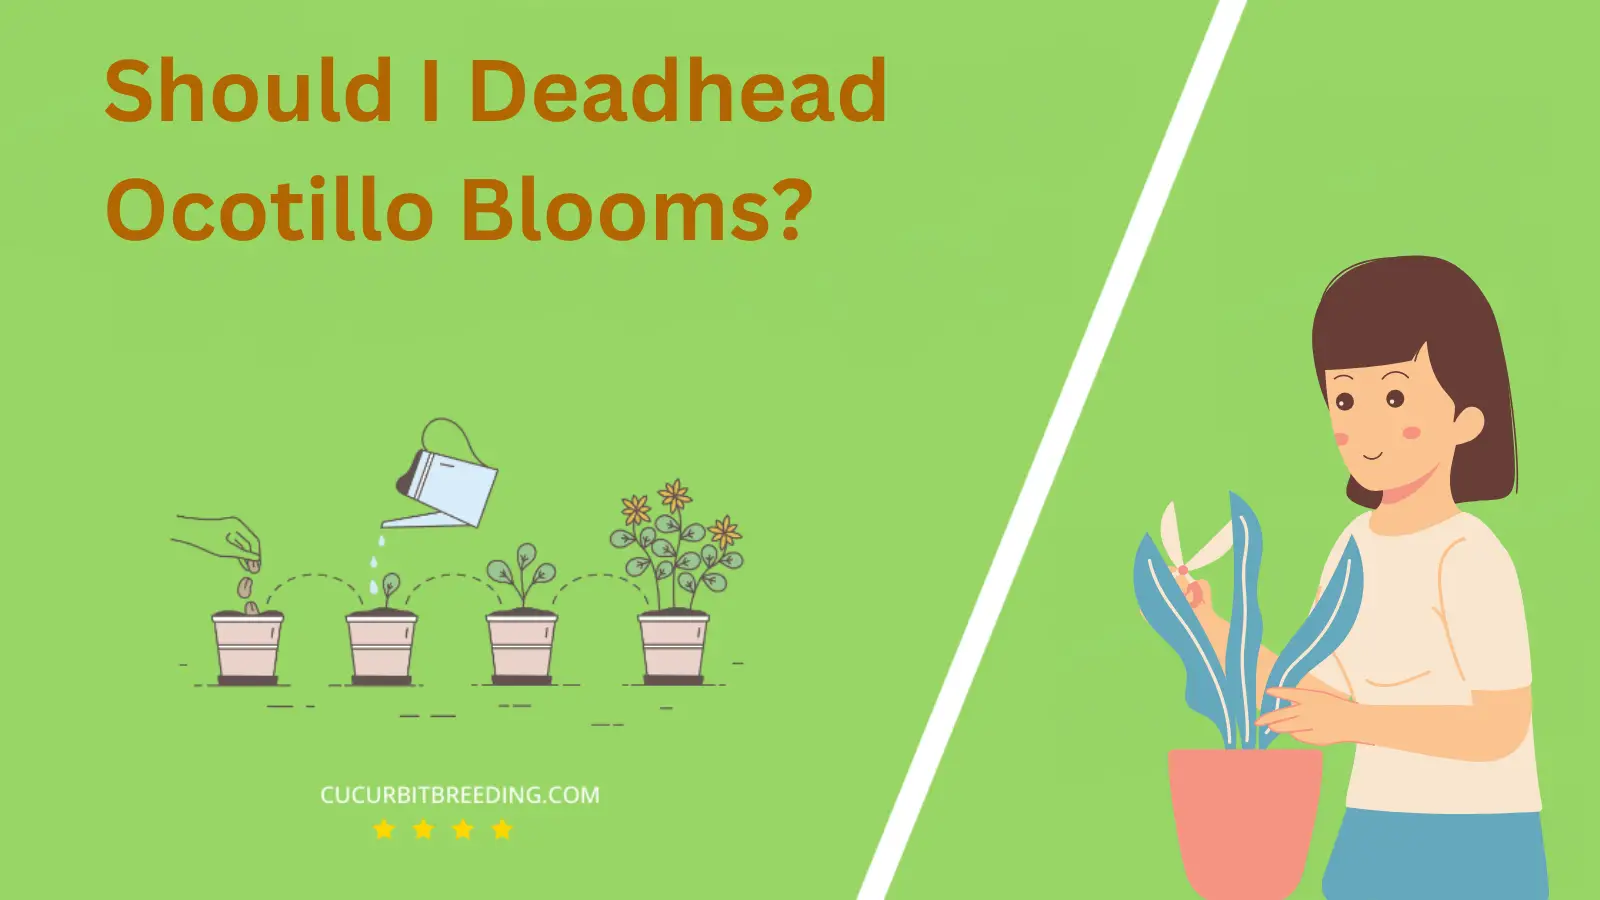 Should I Deadhead Ocotillo Blooms?